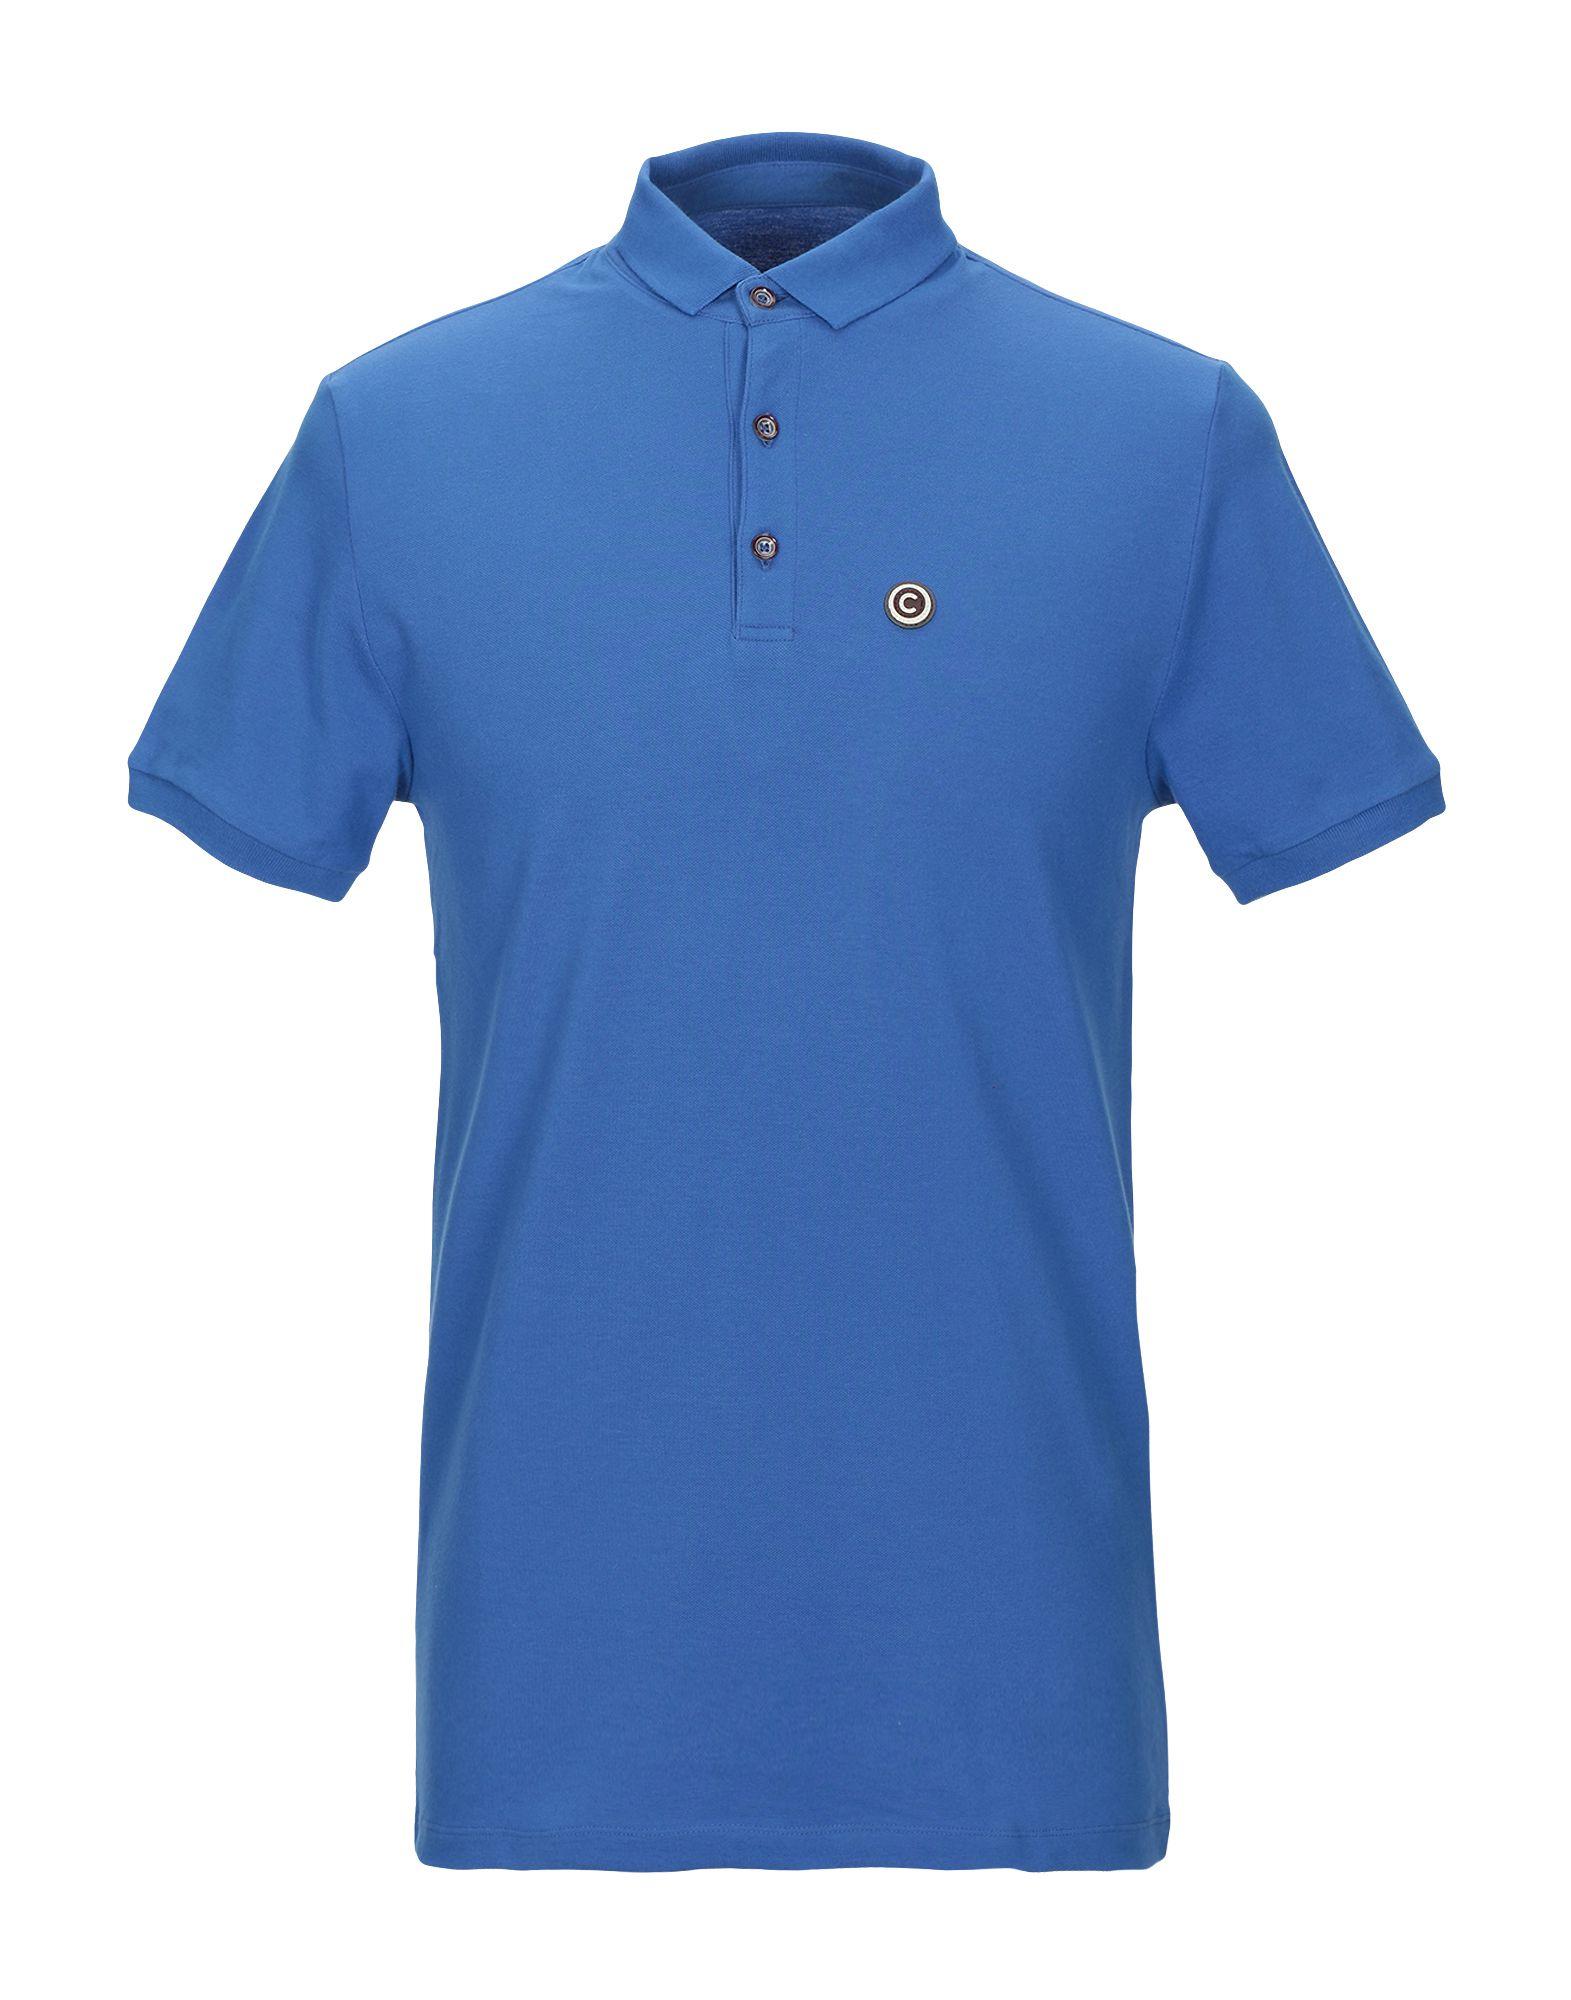 Colmar Polo Shirt in Blue for Men - Lyst